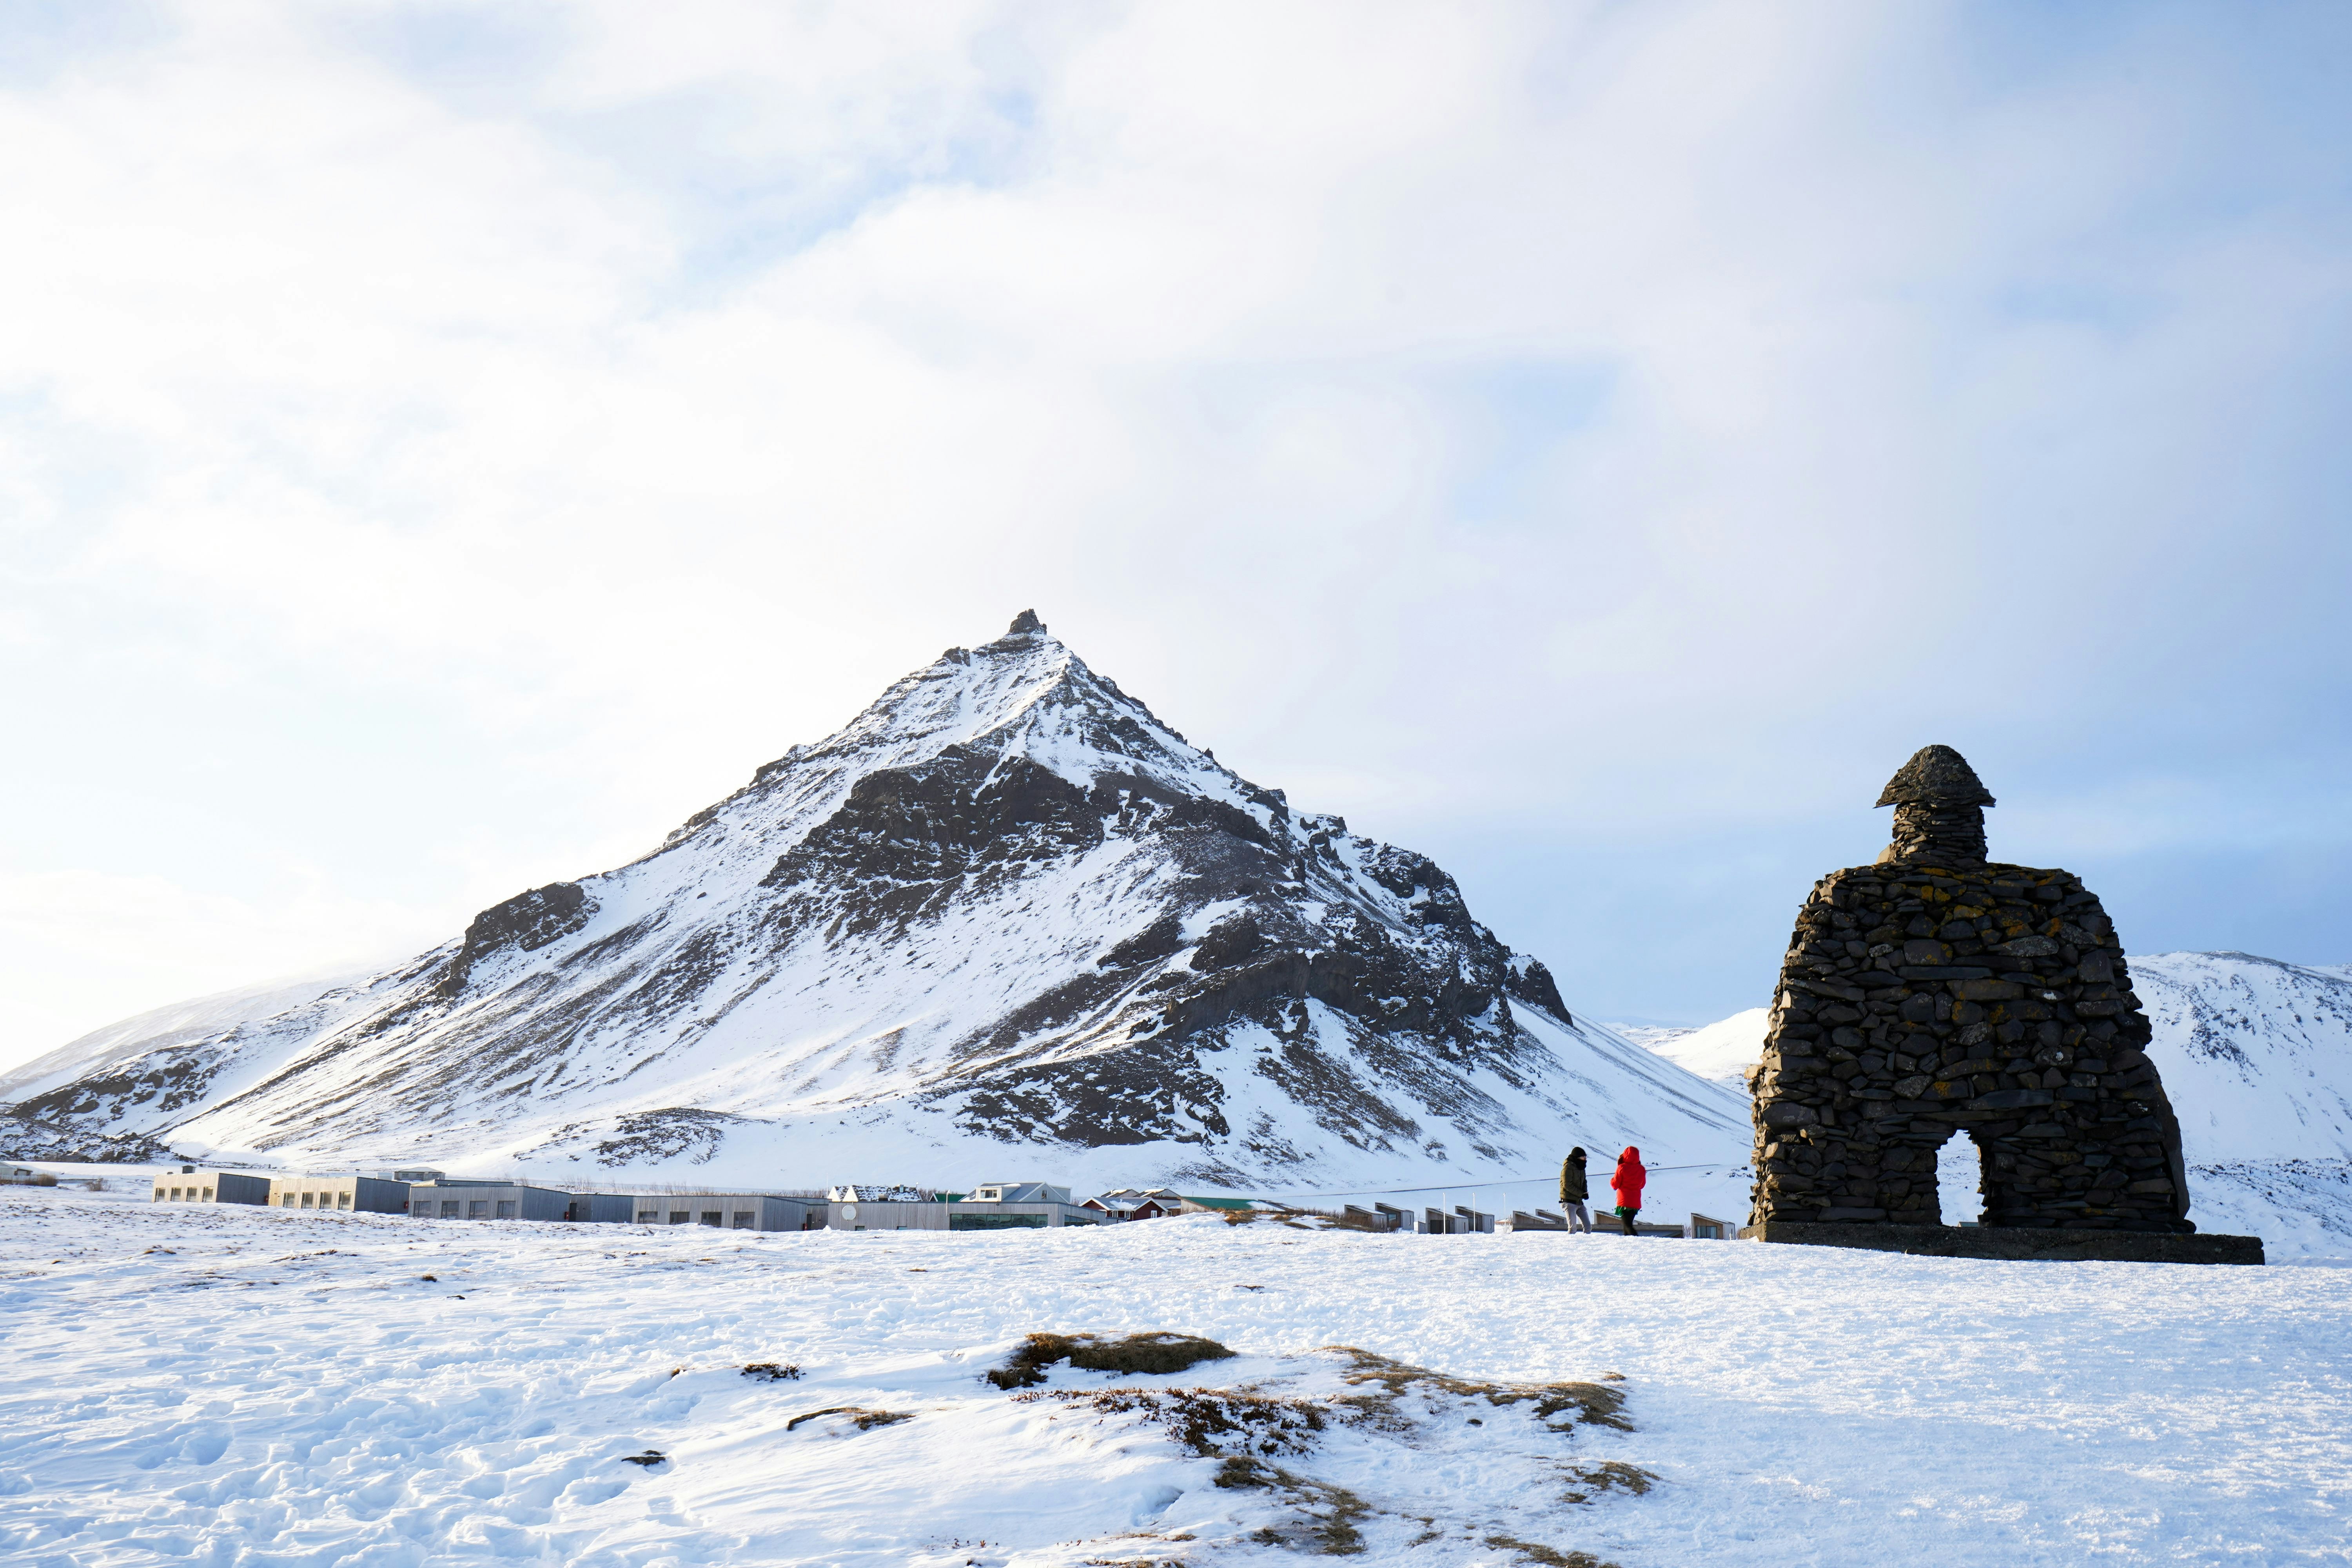 Snæfellsjökull national park lies in the westernmost part of Snæfellsnes peninsula ; 
Snæfellsjökull National Park 
Shutterstock ID 1701342907; your: Bridget Brown; gl: 65050; netsuite: Online Editorial; full: POI Image Update